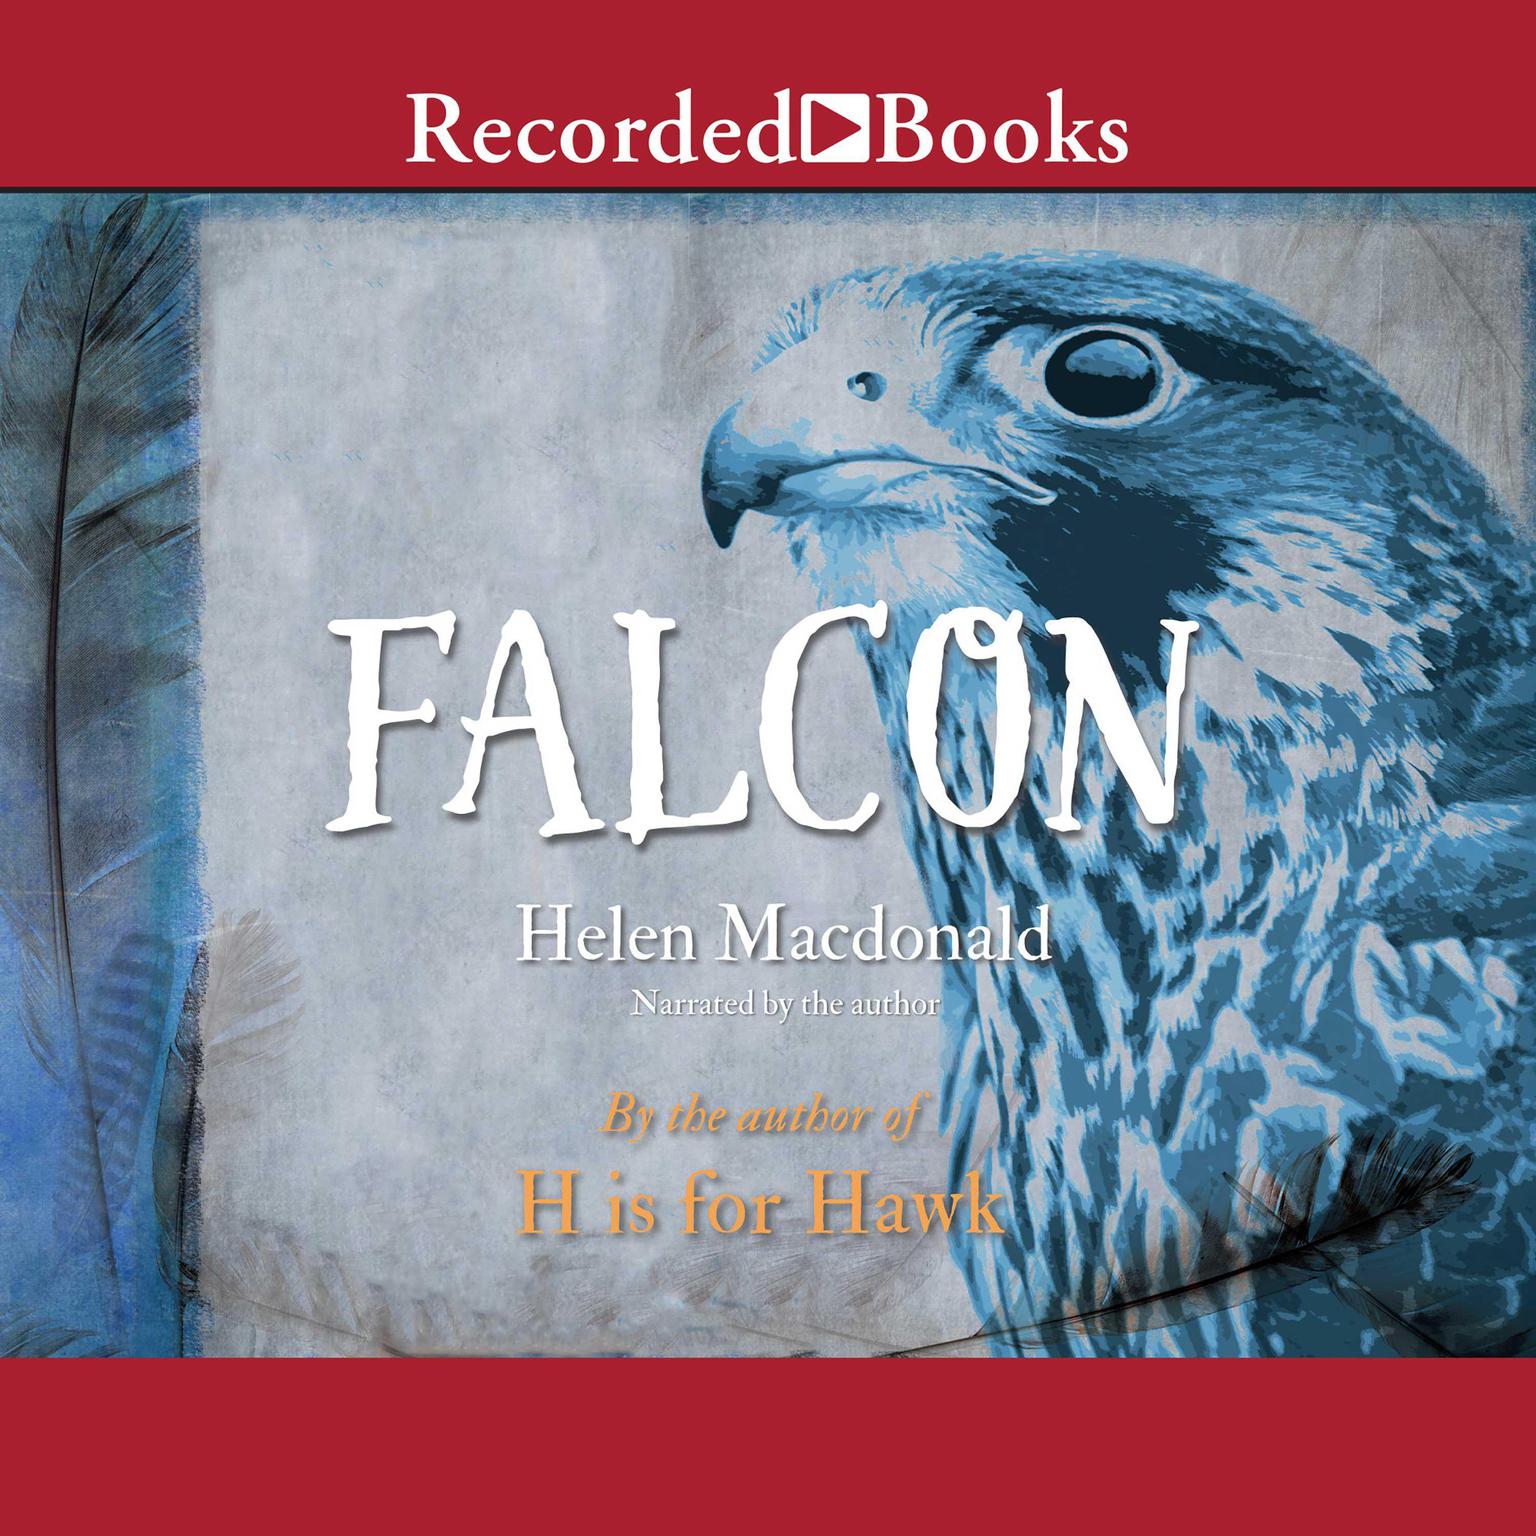 Falcon Audiobook, by Helen Macdonald